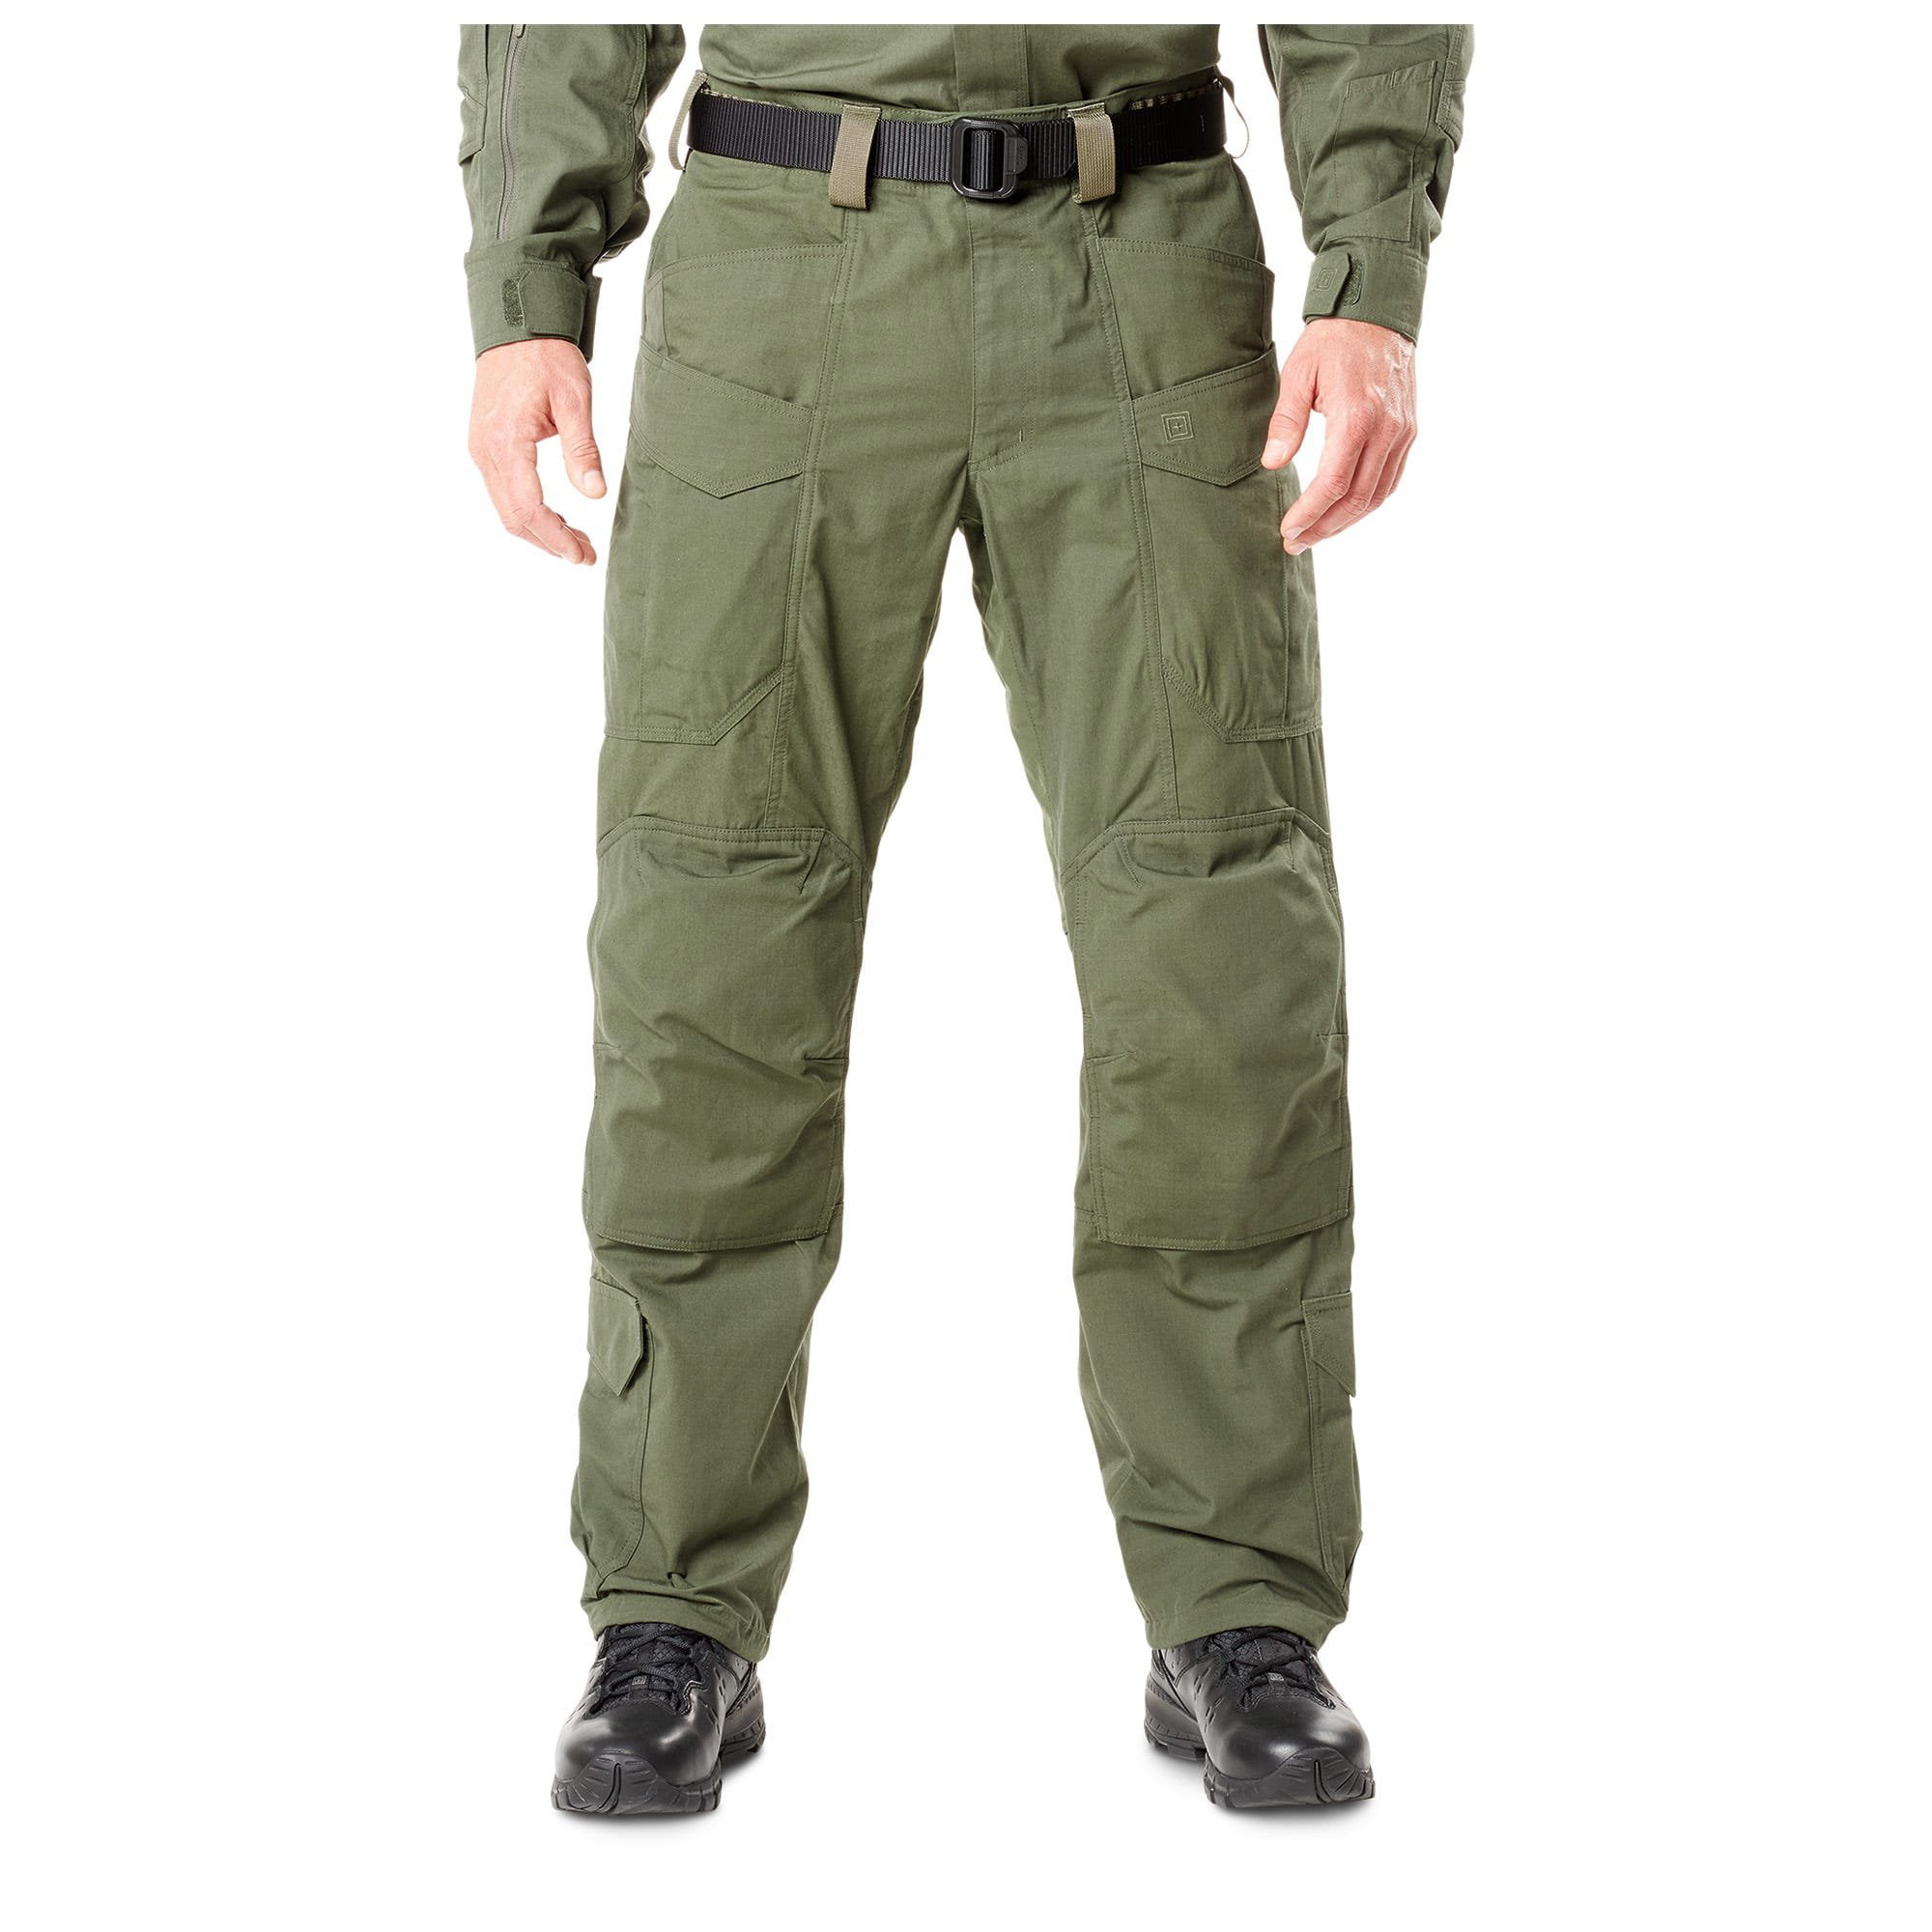 5.11 Tactical Men's XPRT Tactical Work Pants, Teflon Treated Fabric